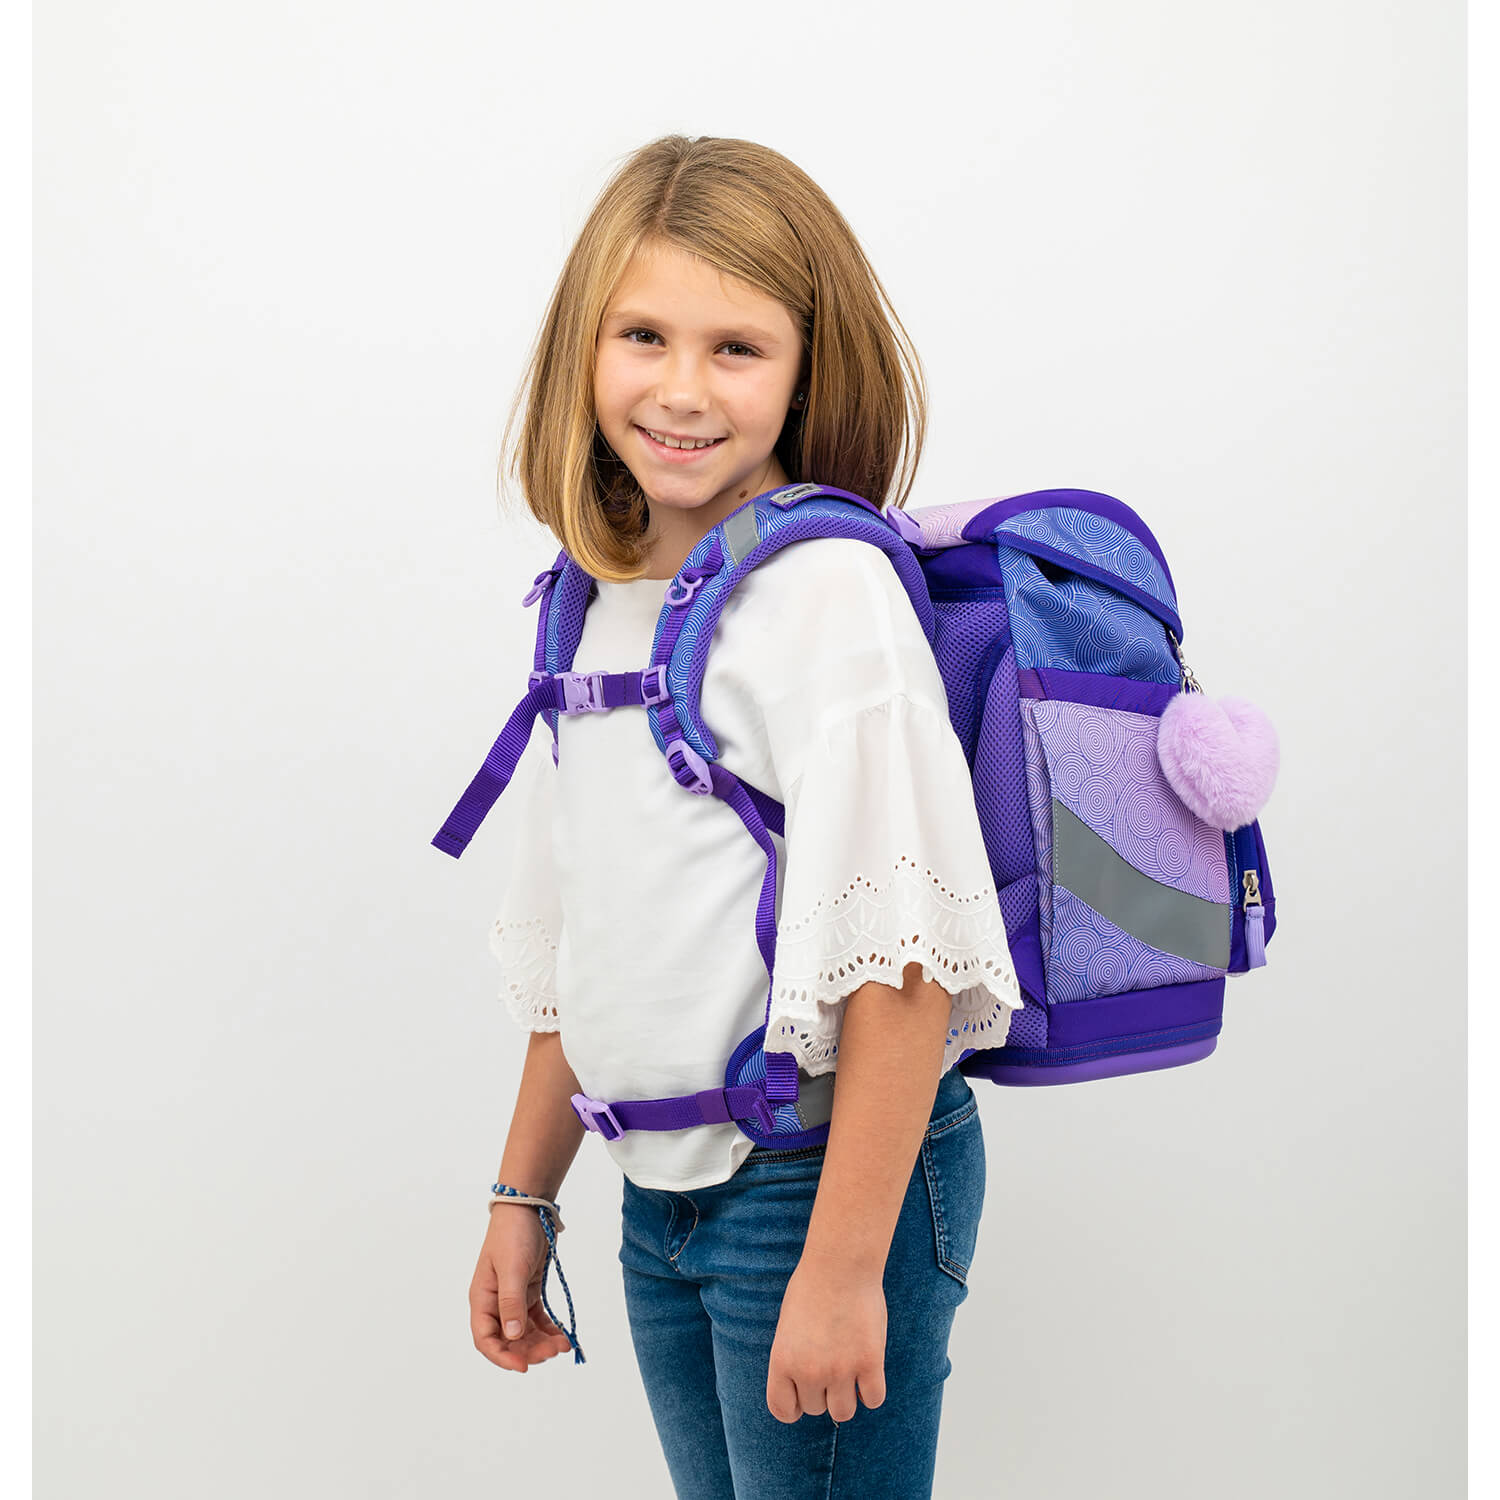 Smarty Wonder 2 schoolbag set 5 pcs